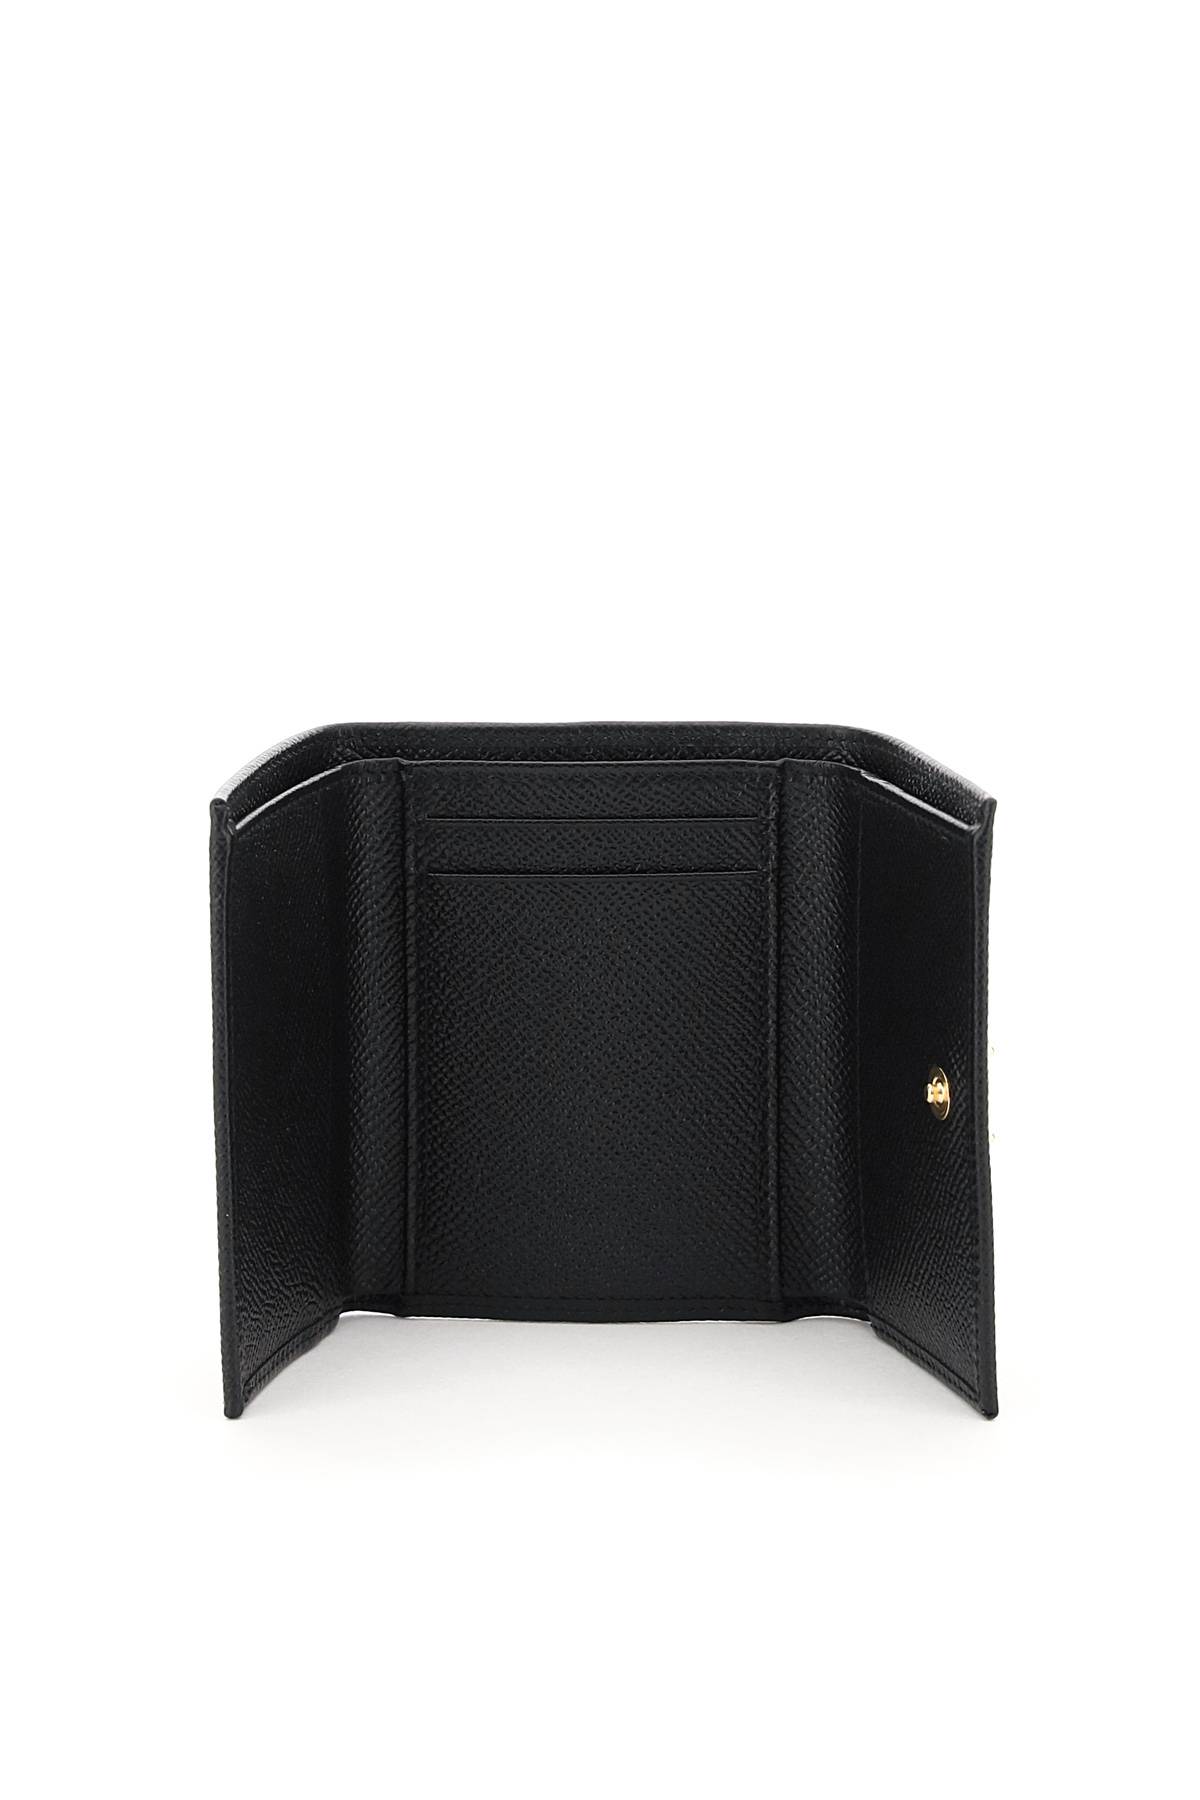 Shop Dolce & Gabbana French Flap Wallet In Black